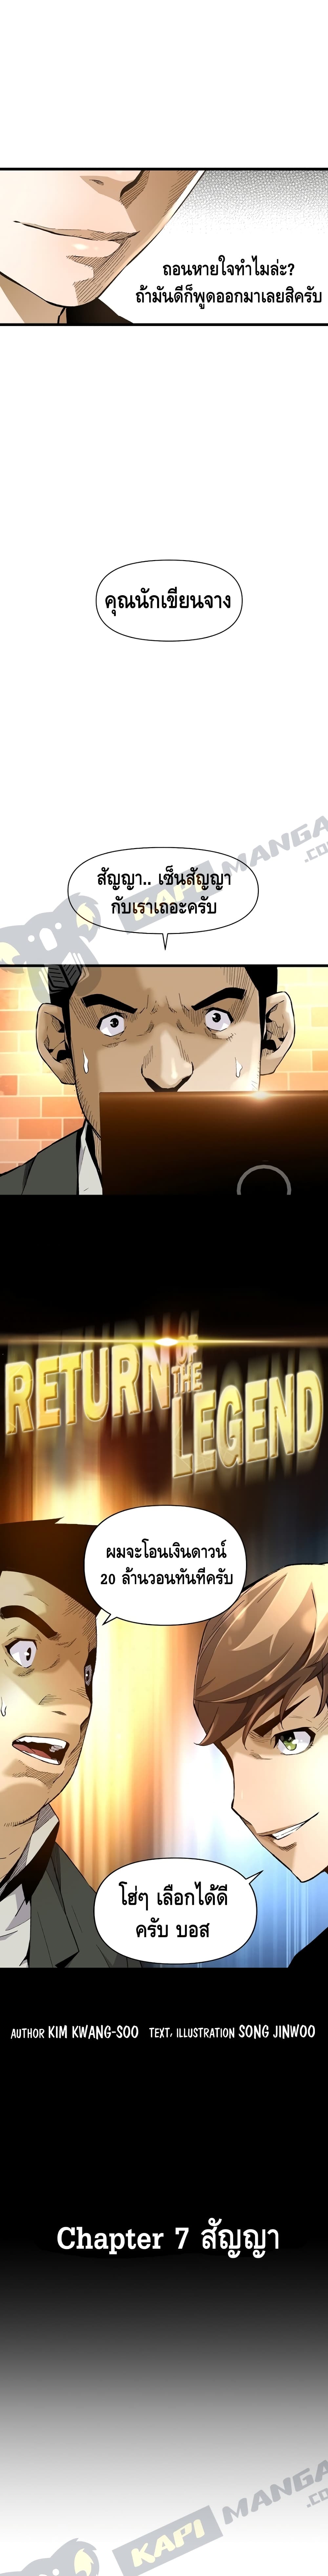 Return of the Legend 7 03